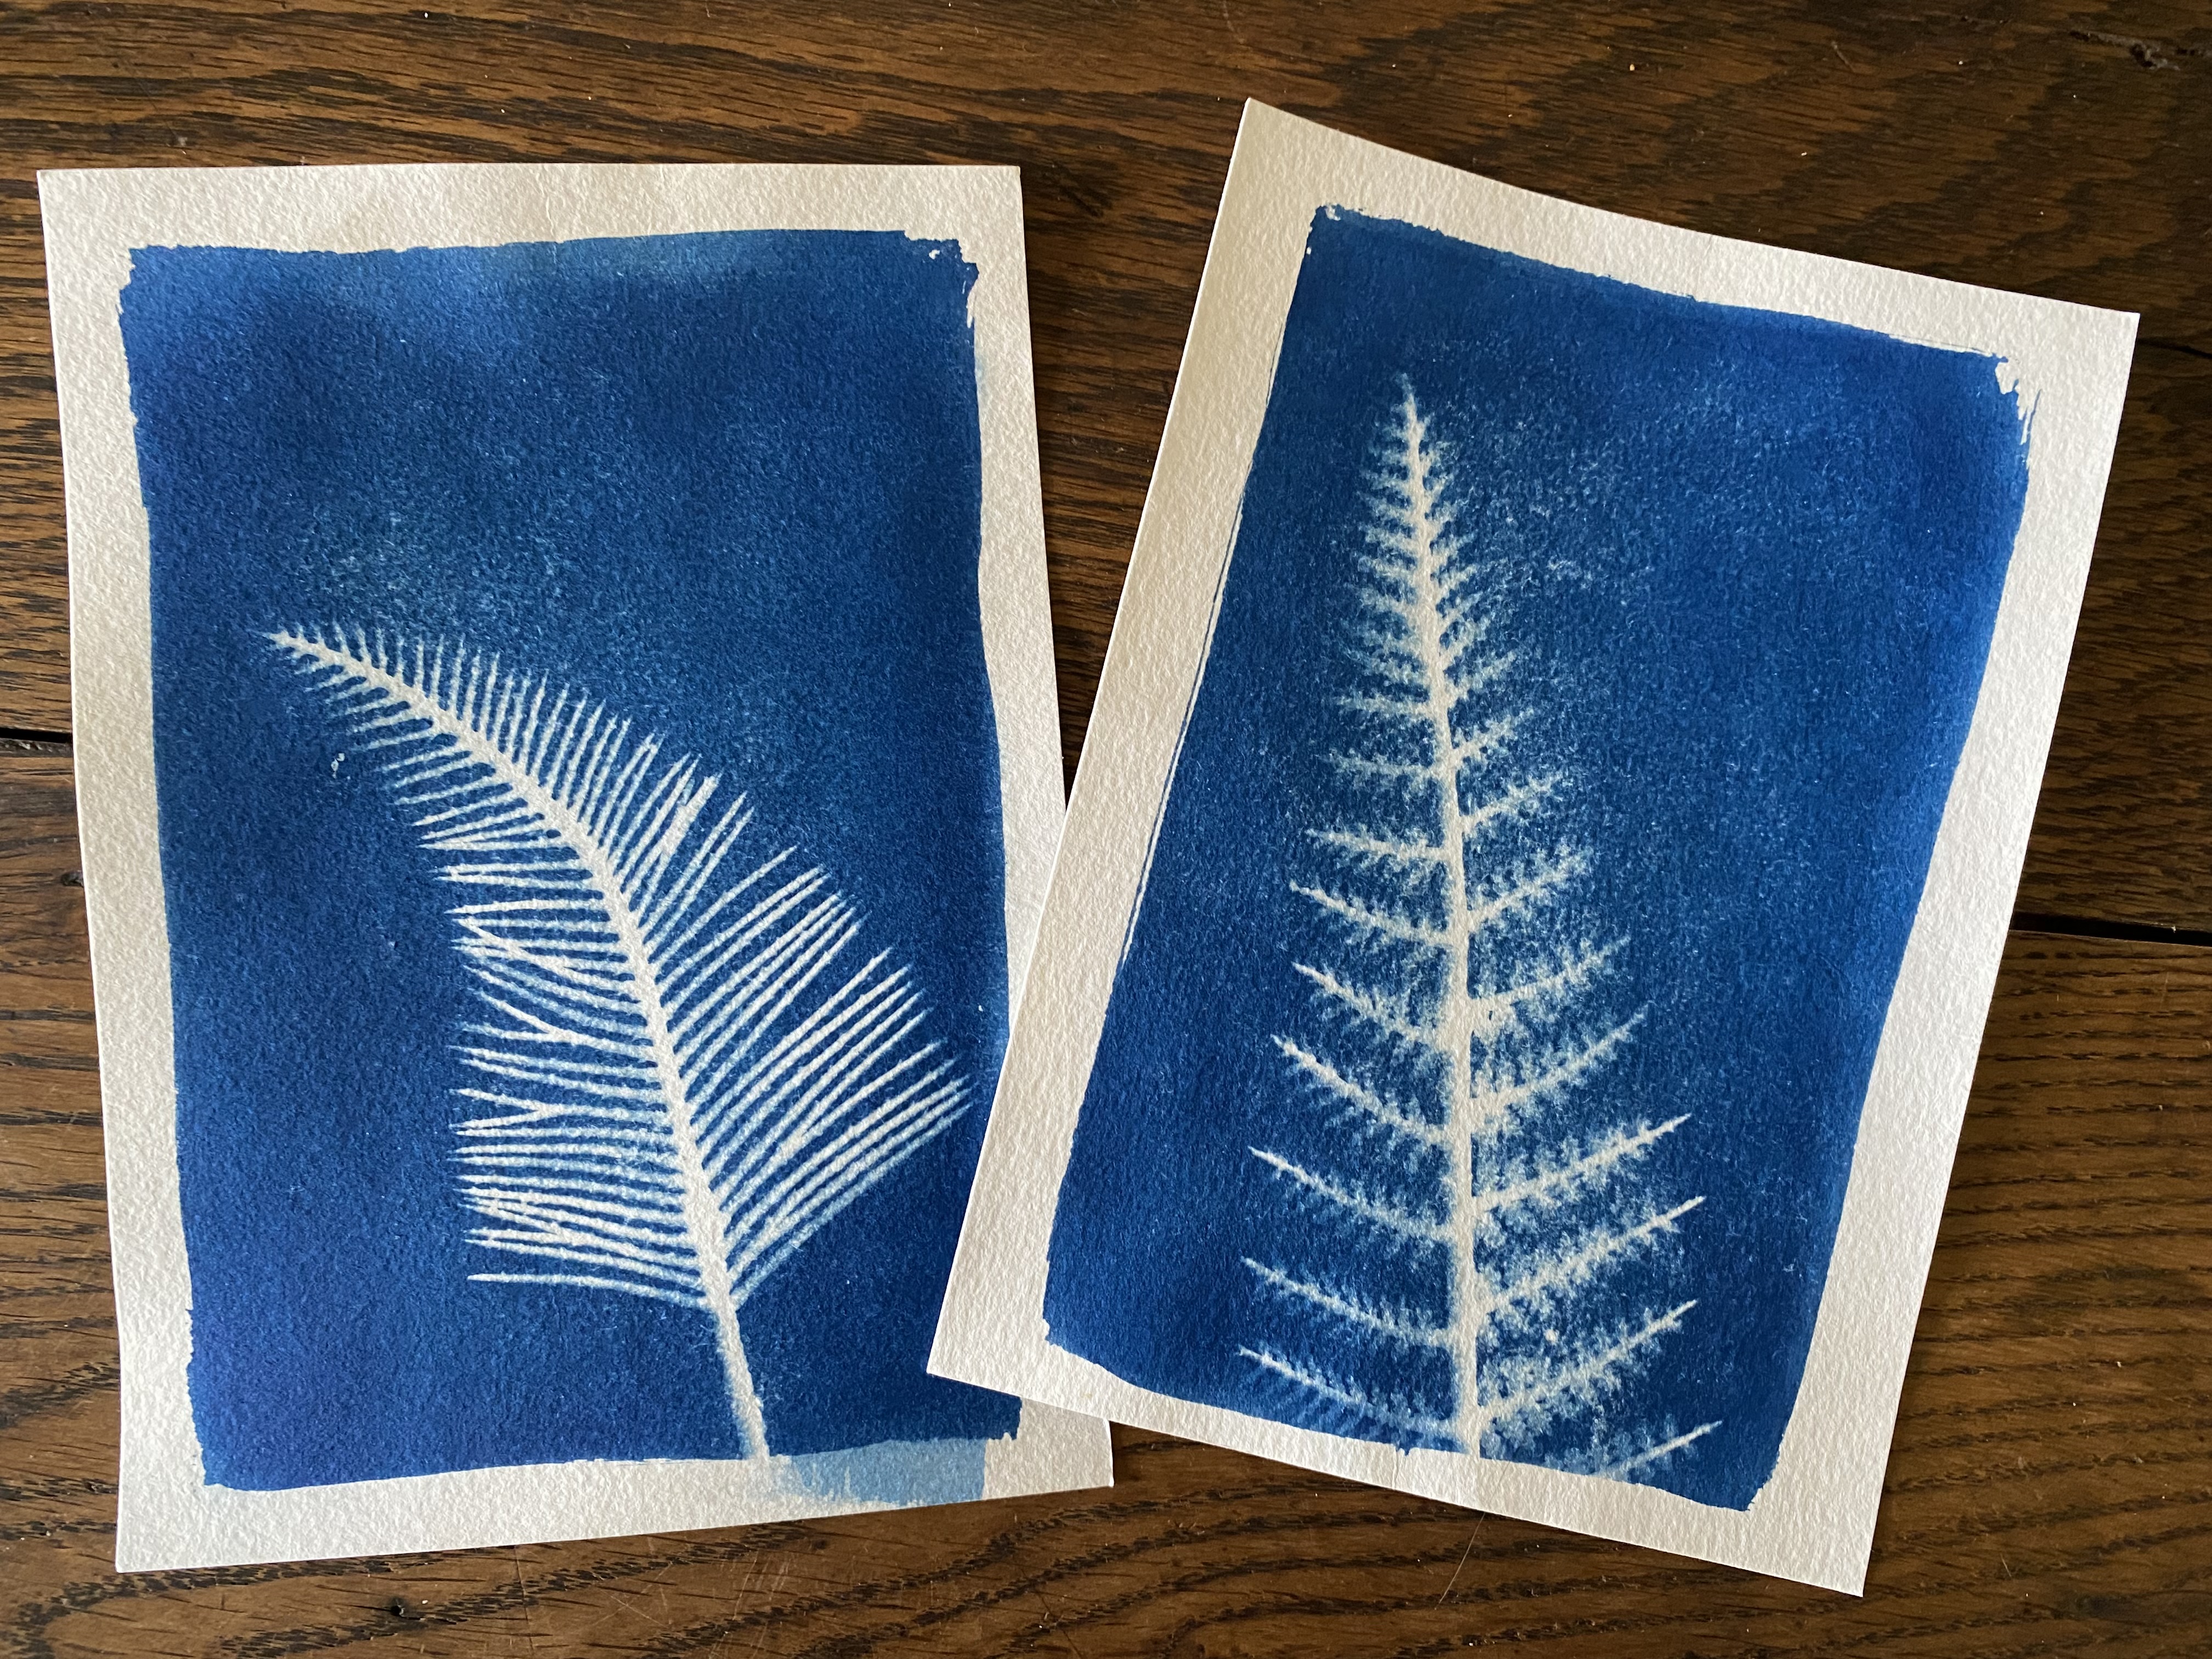 Dark blue cyanotype print of two fern leaves